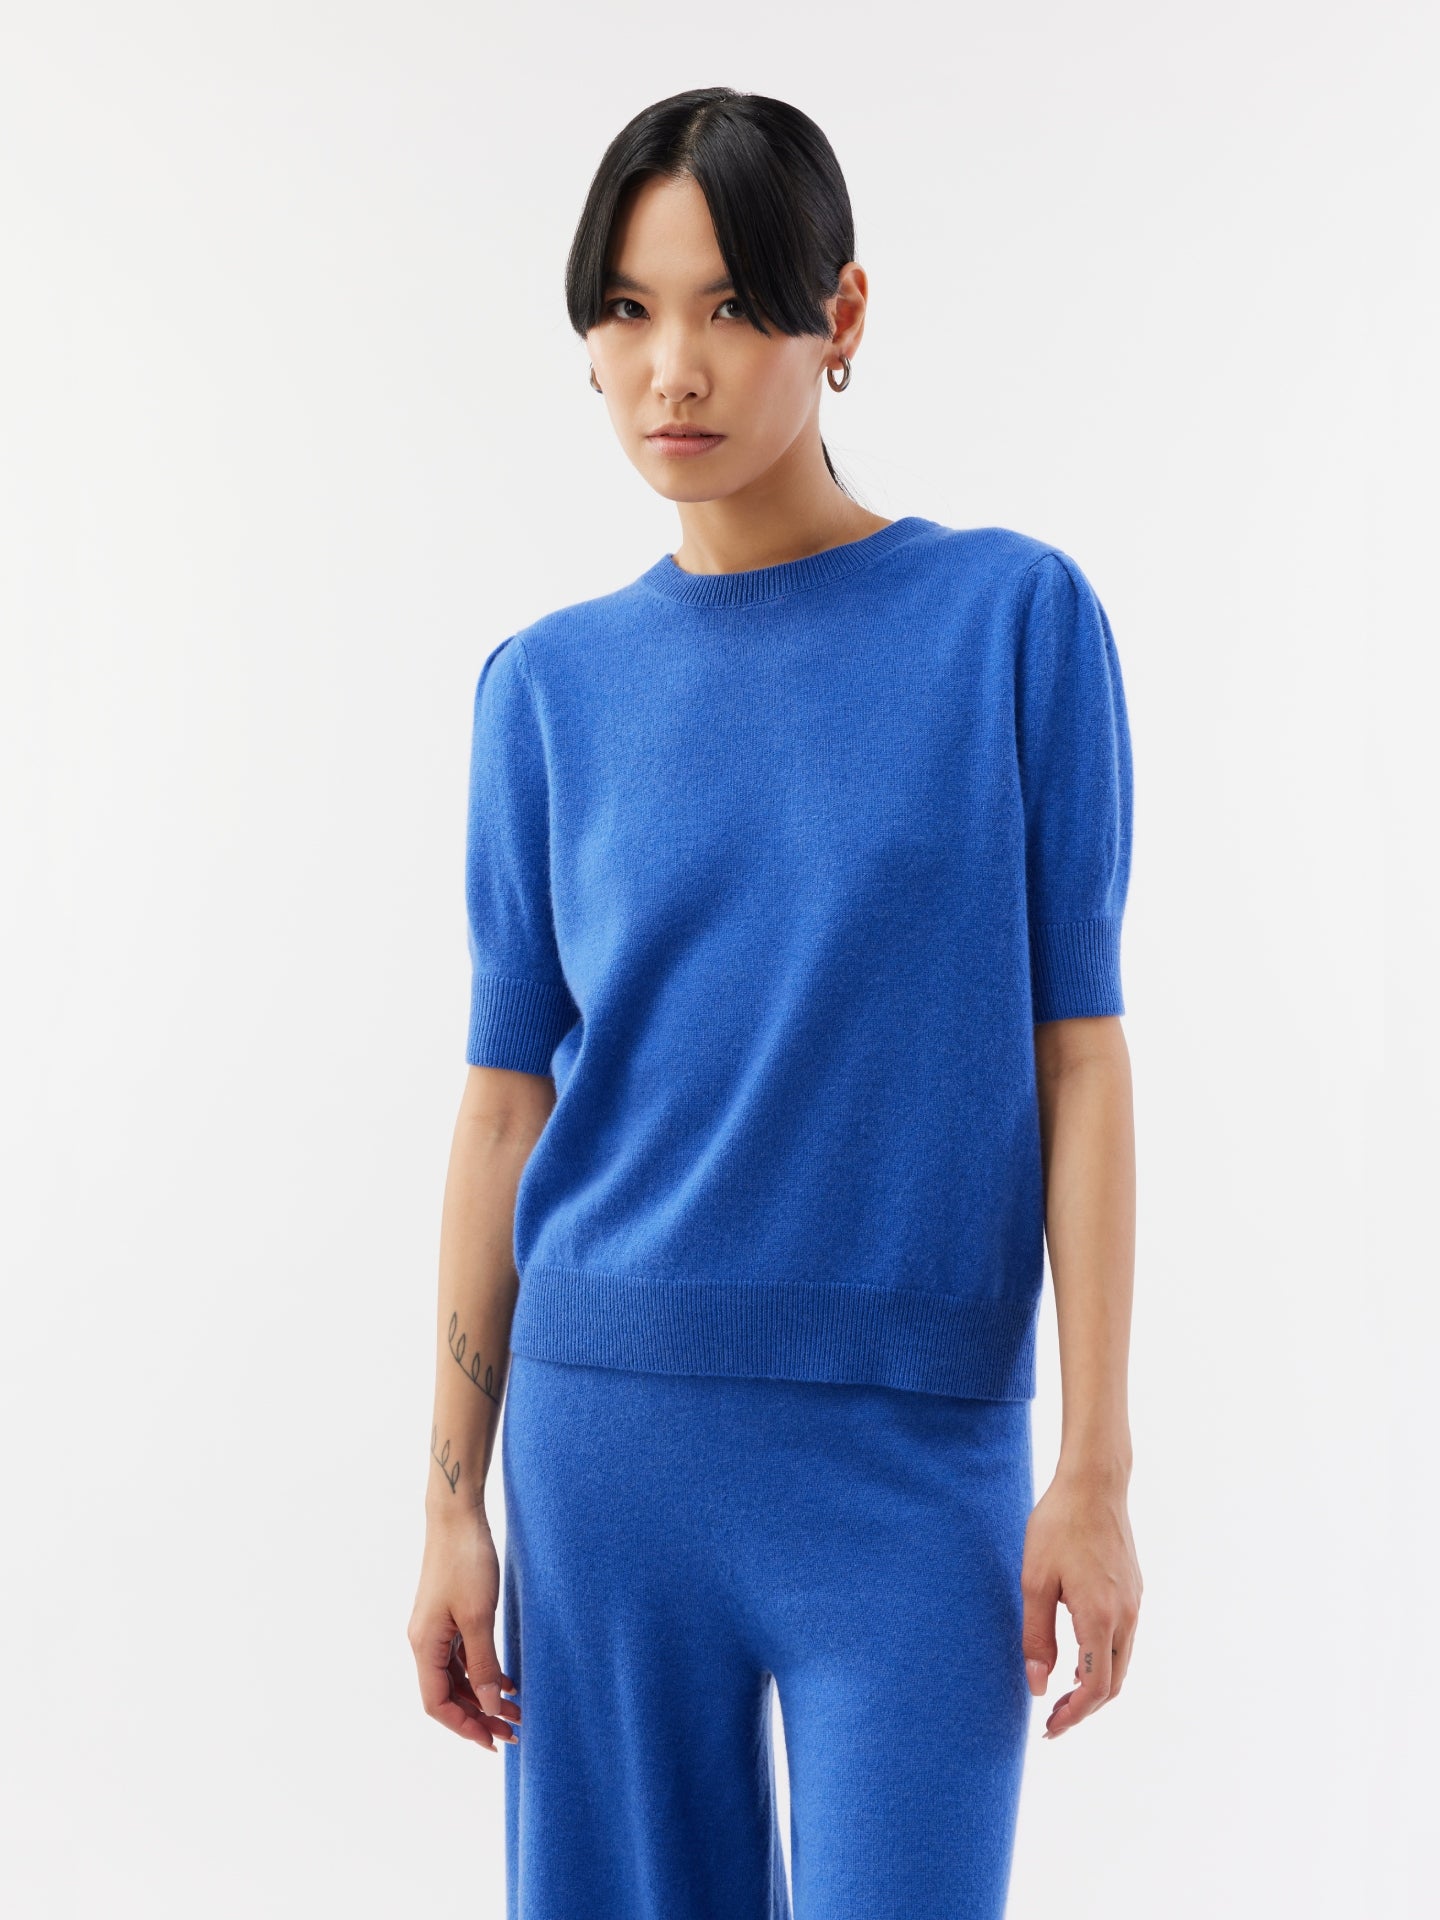 Women's Cashmere Puff Strong Blue Top - Gobi Cashmere